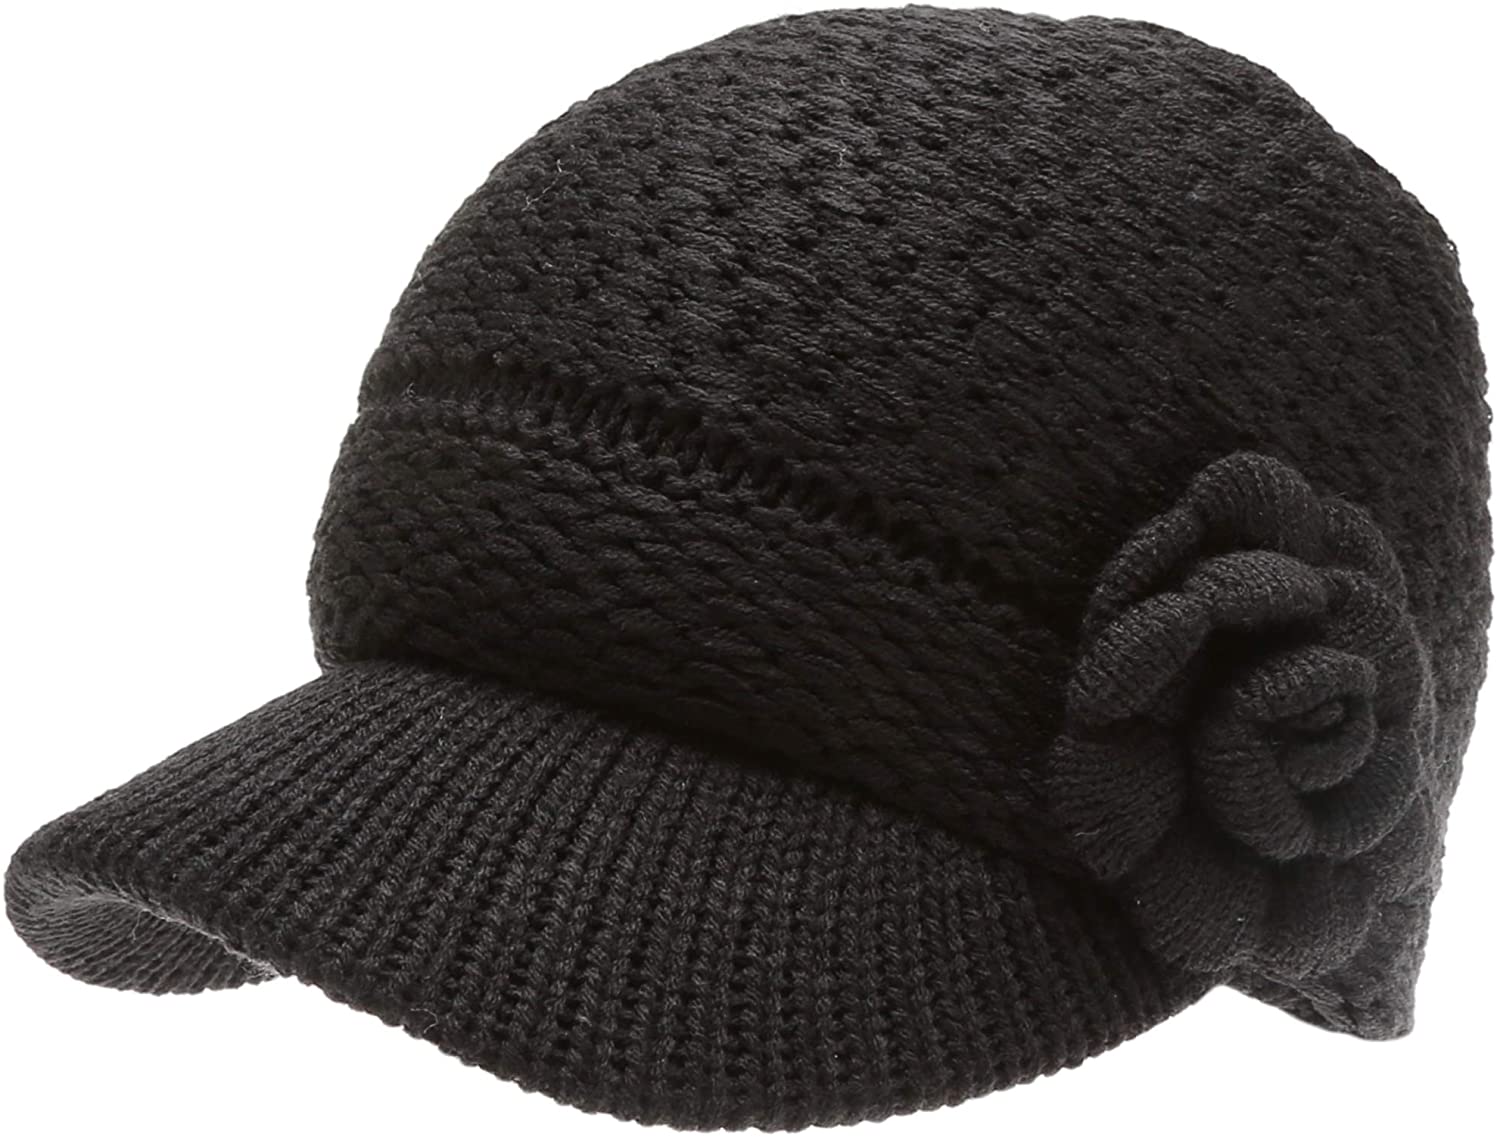 MIRMARU Women’s Knitted Newsboy Hat Double Layer Visor Beanie Cap with Soft Warm Fleece Lining 